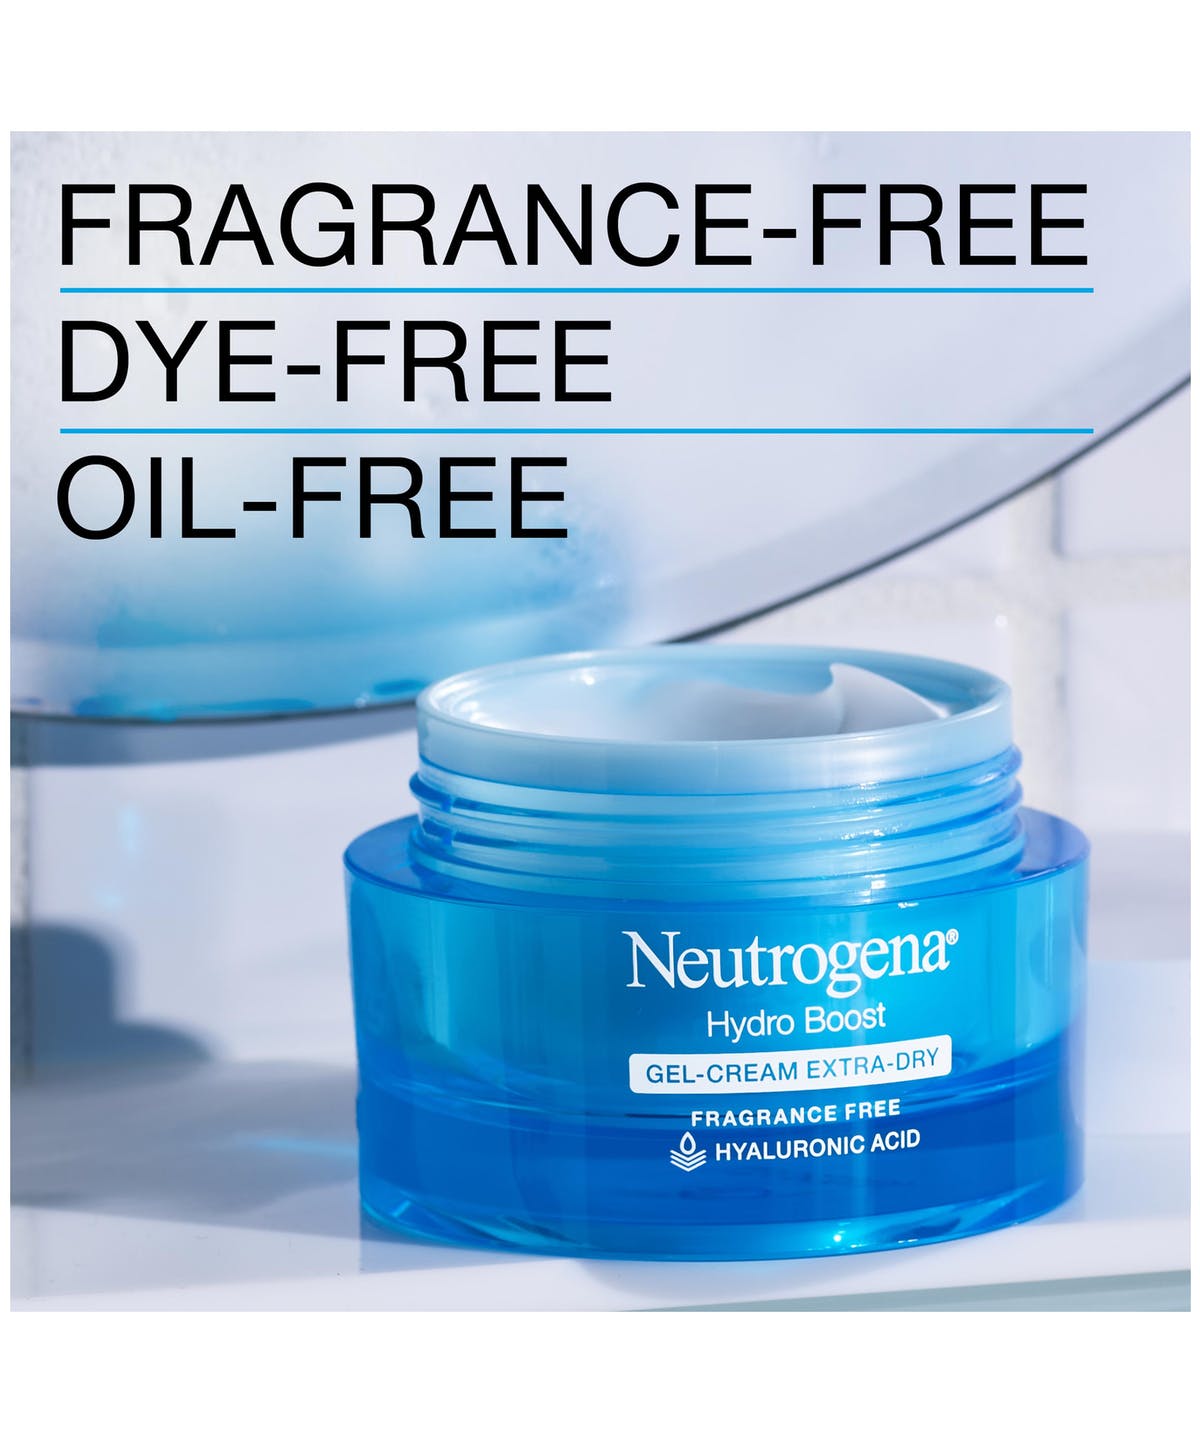 Neutrogena Hydro Boost Gel-Cream for Extra-Dry Skin 48g